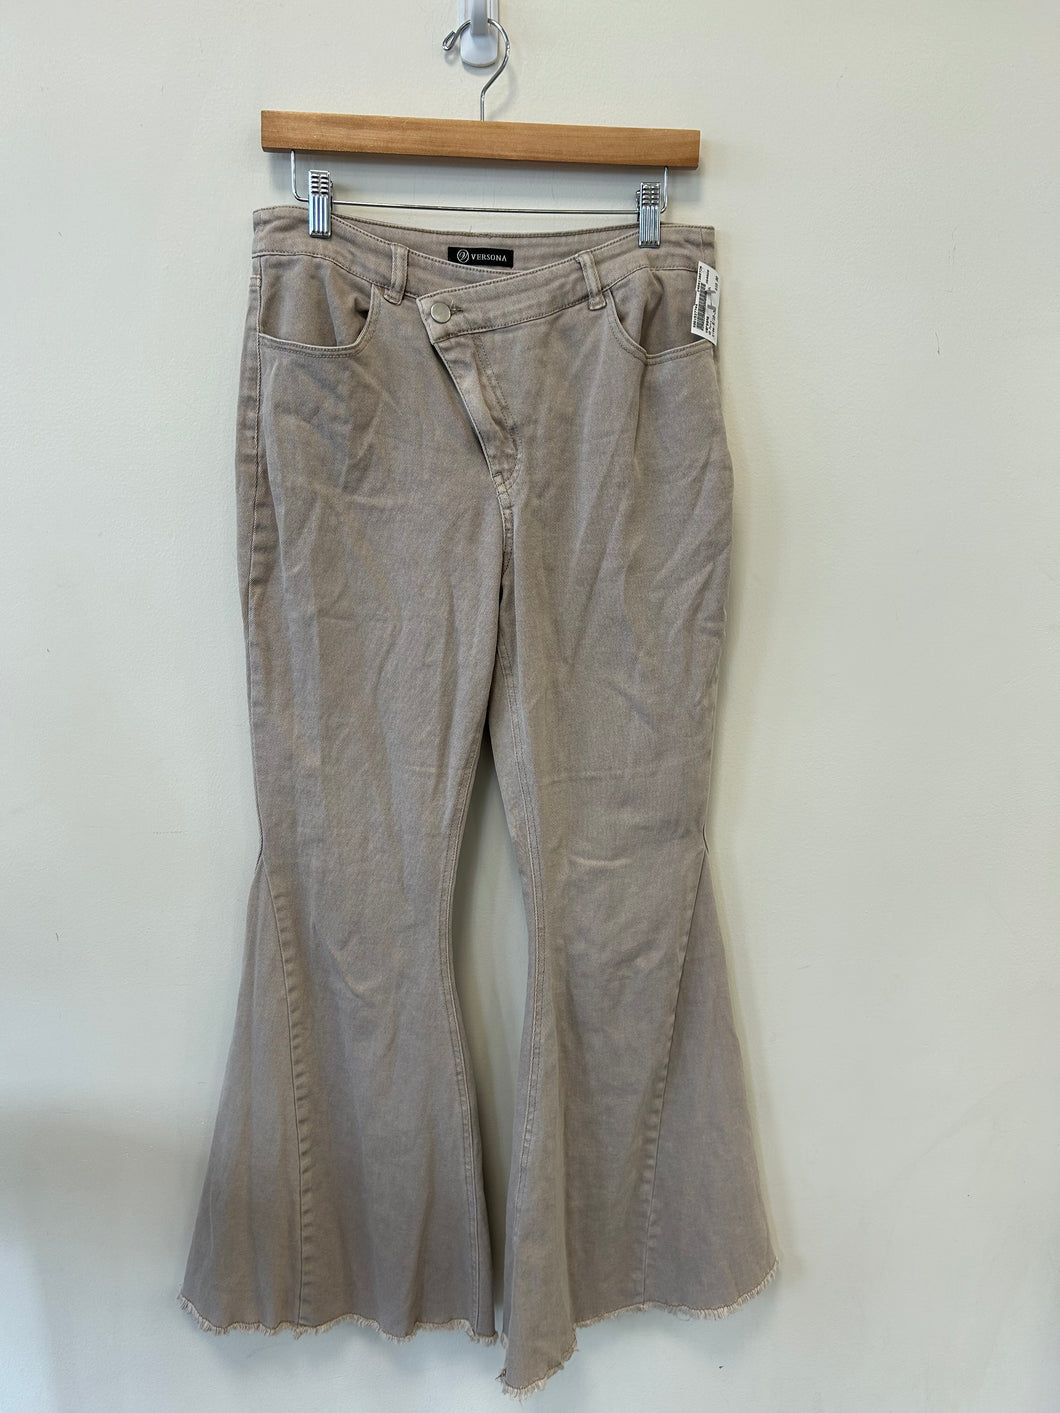 Versona Pants Size 9/10 (30)